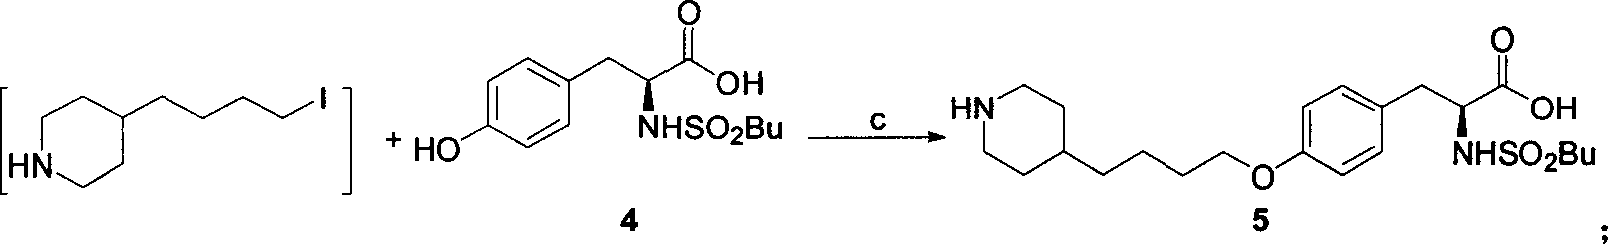 Process for preparation of tirofiban hydrochloride